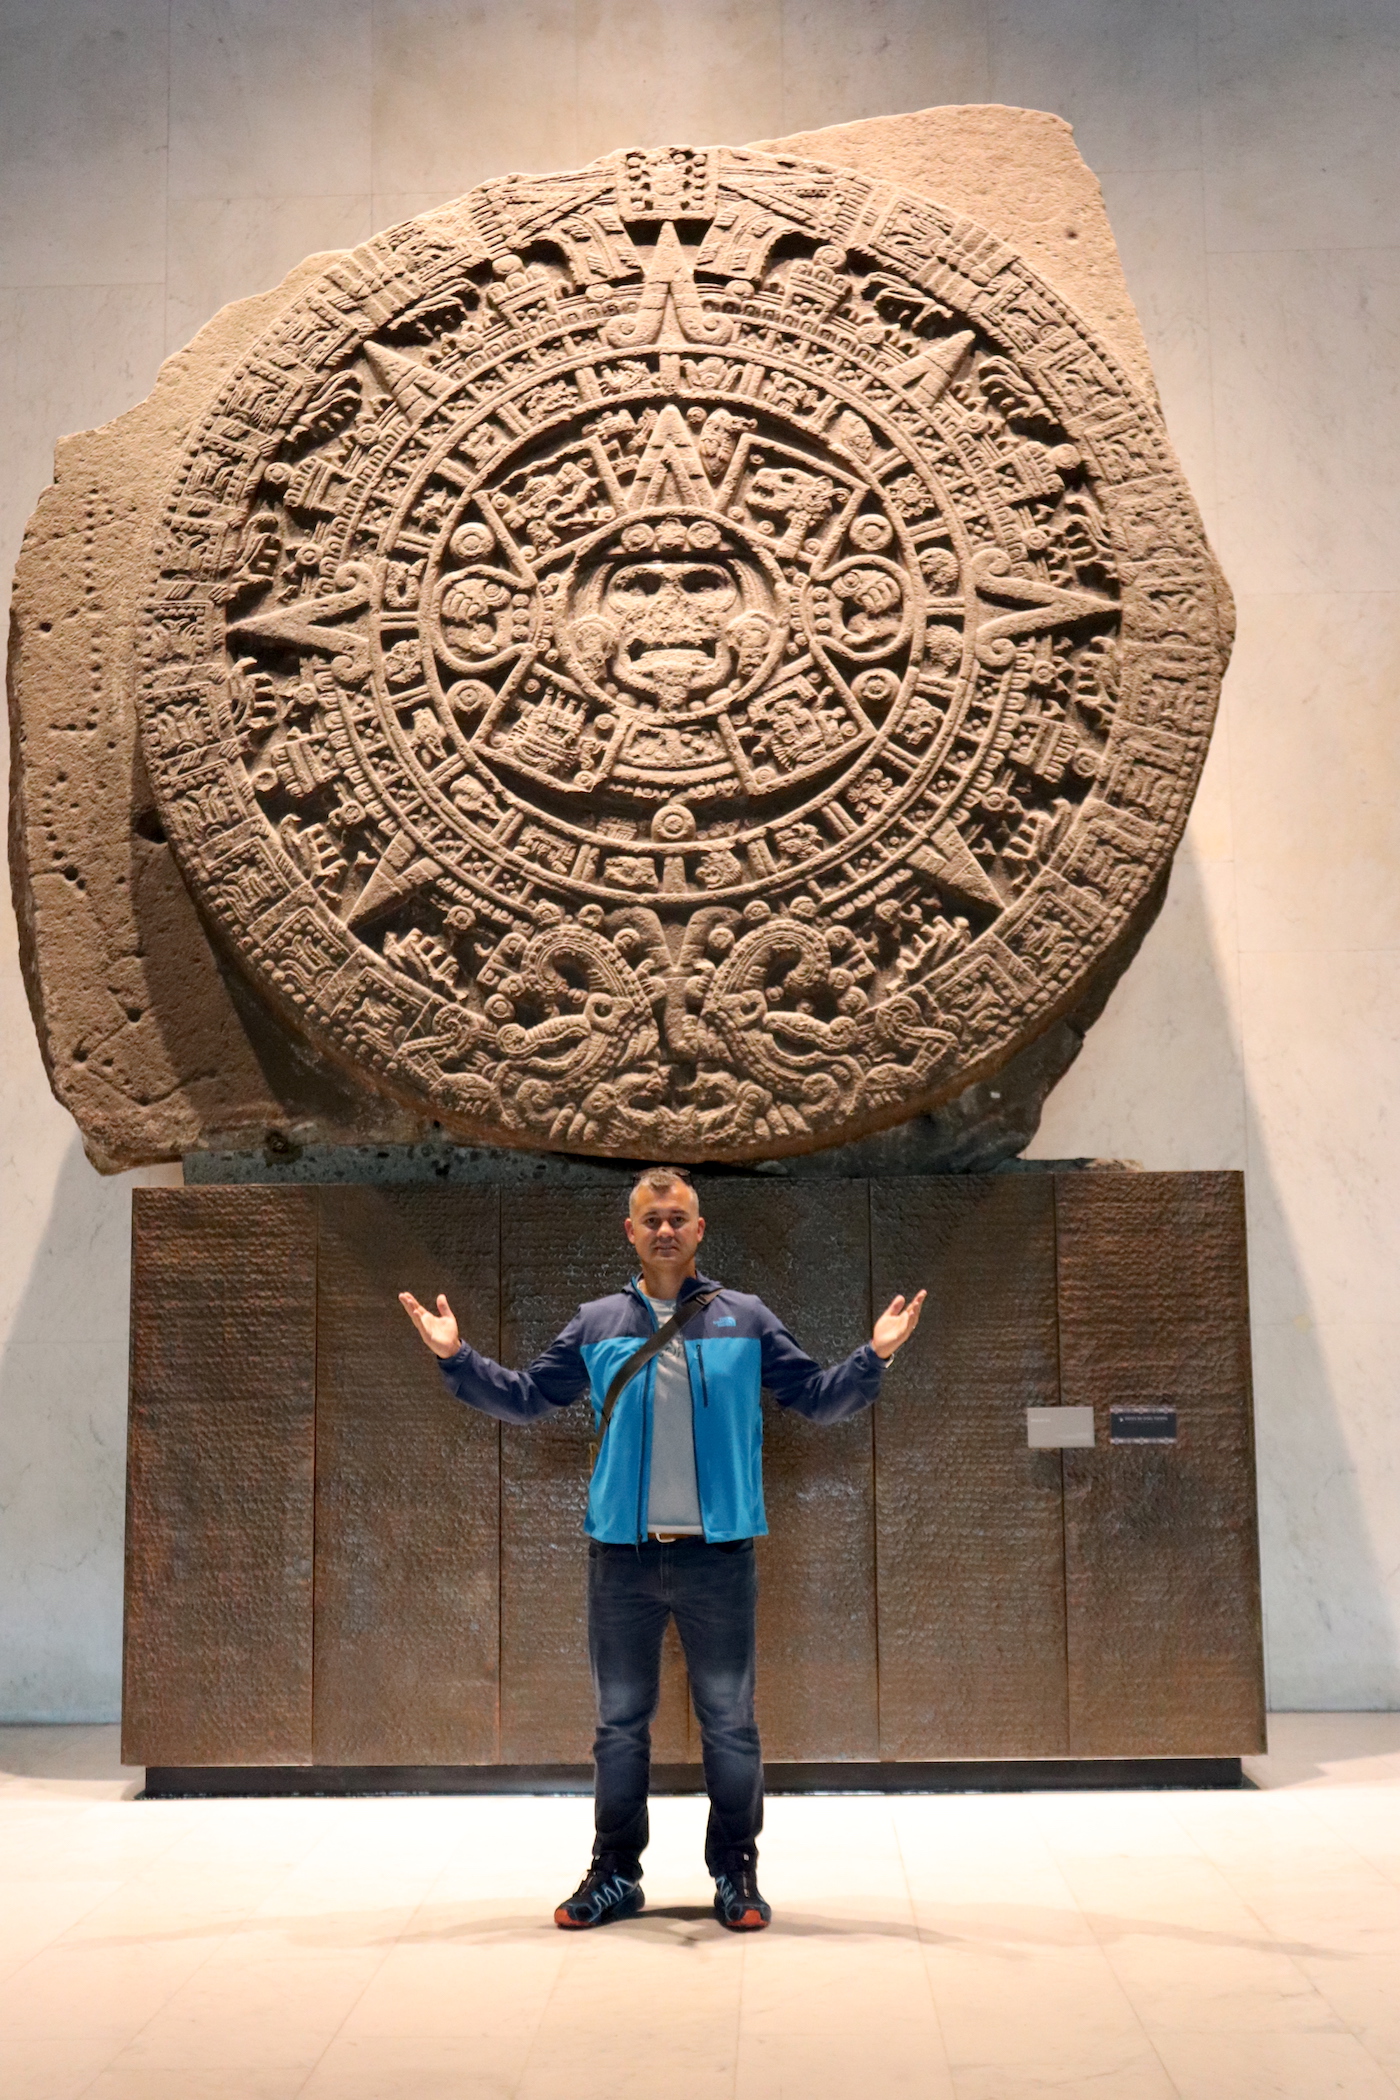 The Aztec Sunstone